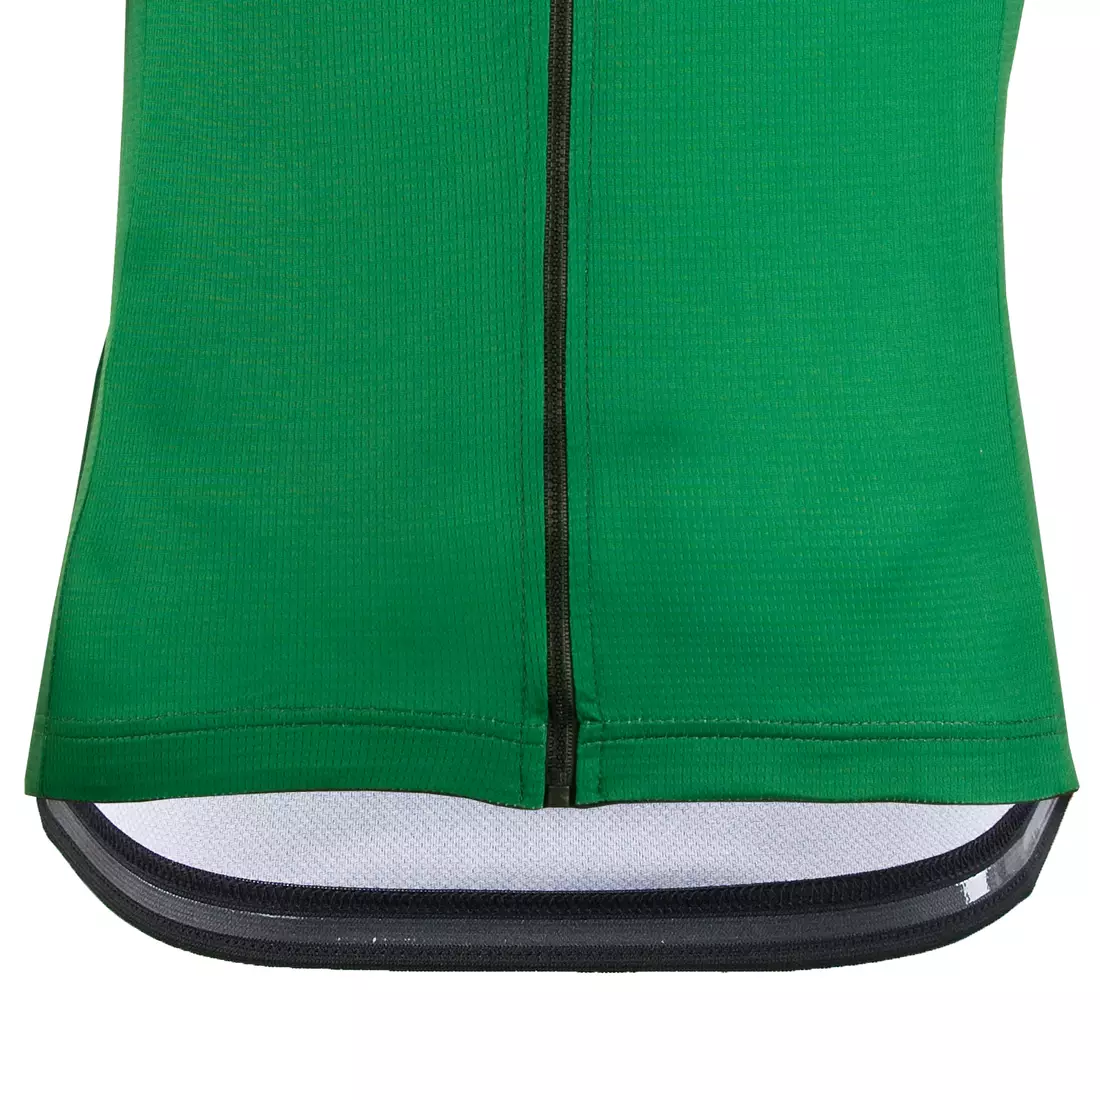 [Set] DEKO STYLE-0421 pánský cyklistický dres s krátkým rukávem, zelená + DEKO POCKET pánské cyklistické kraťasy, černá